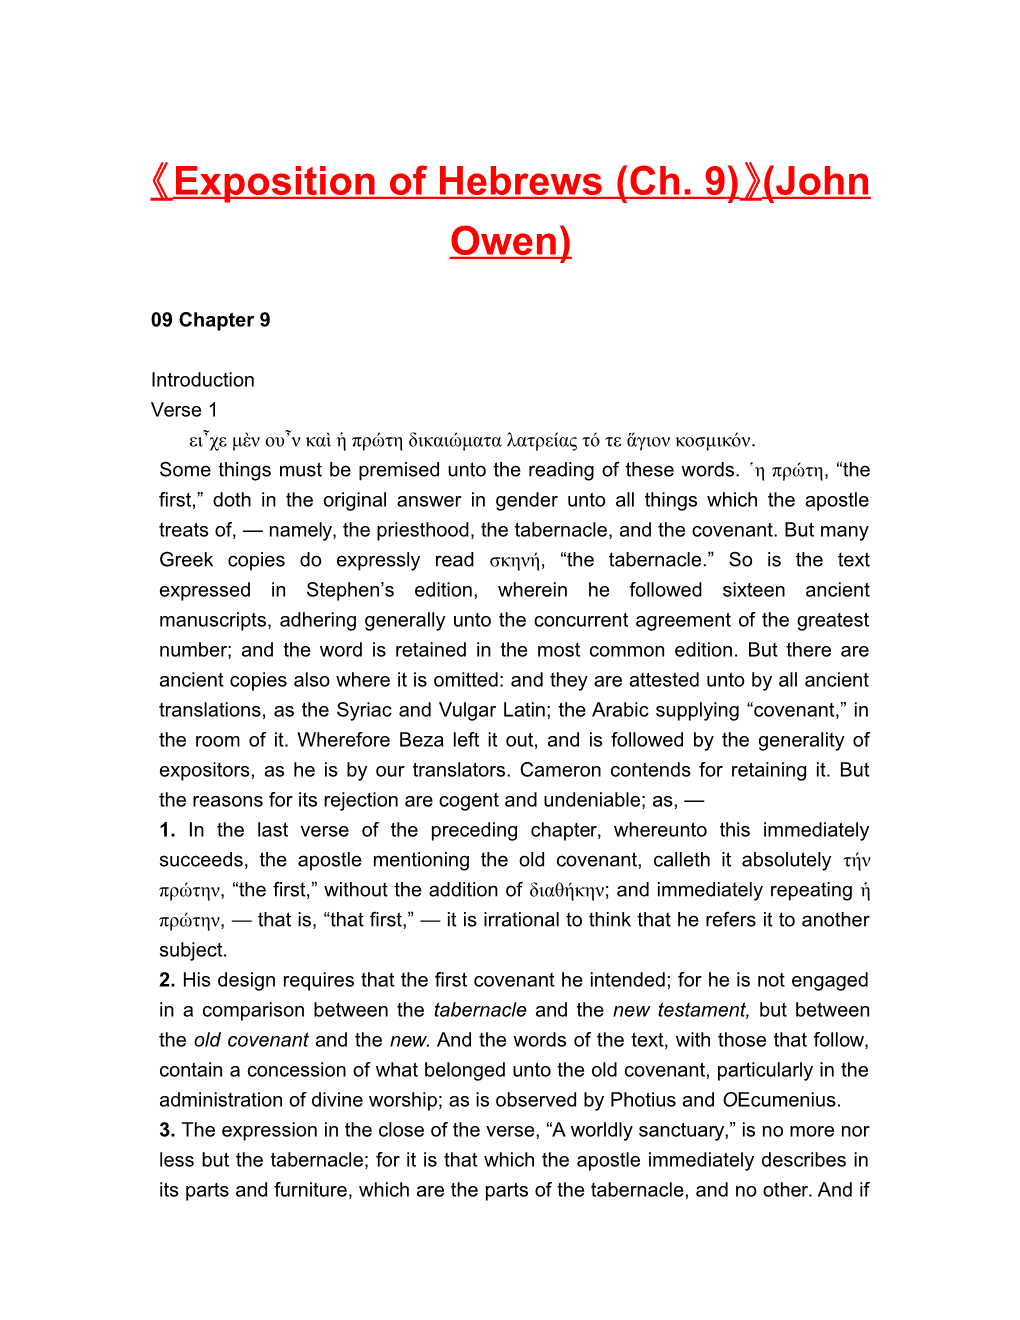 Exposition of Hebrews (Ch. 9) (John Owen)